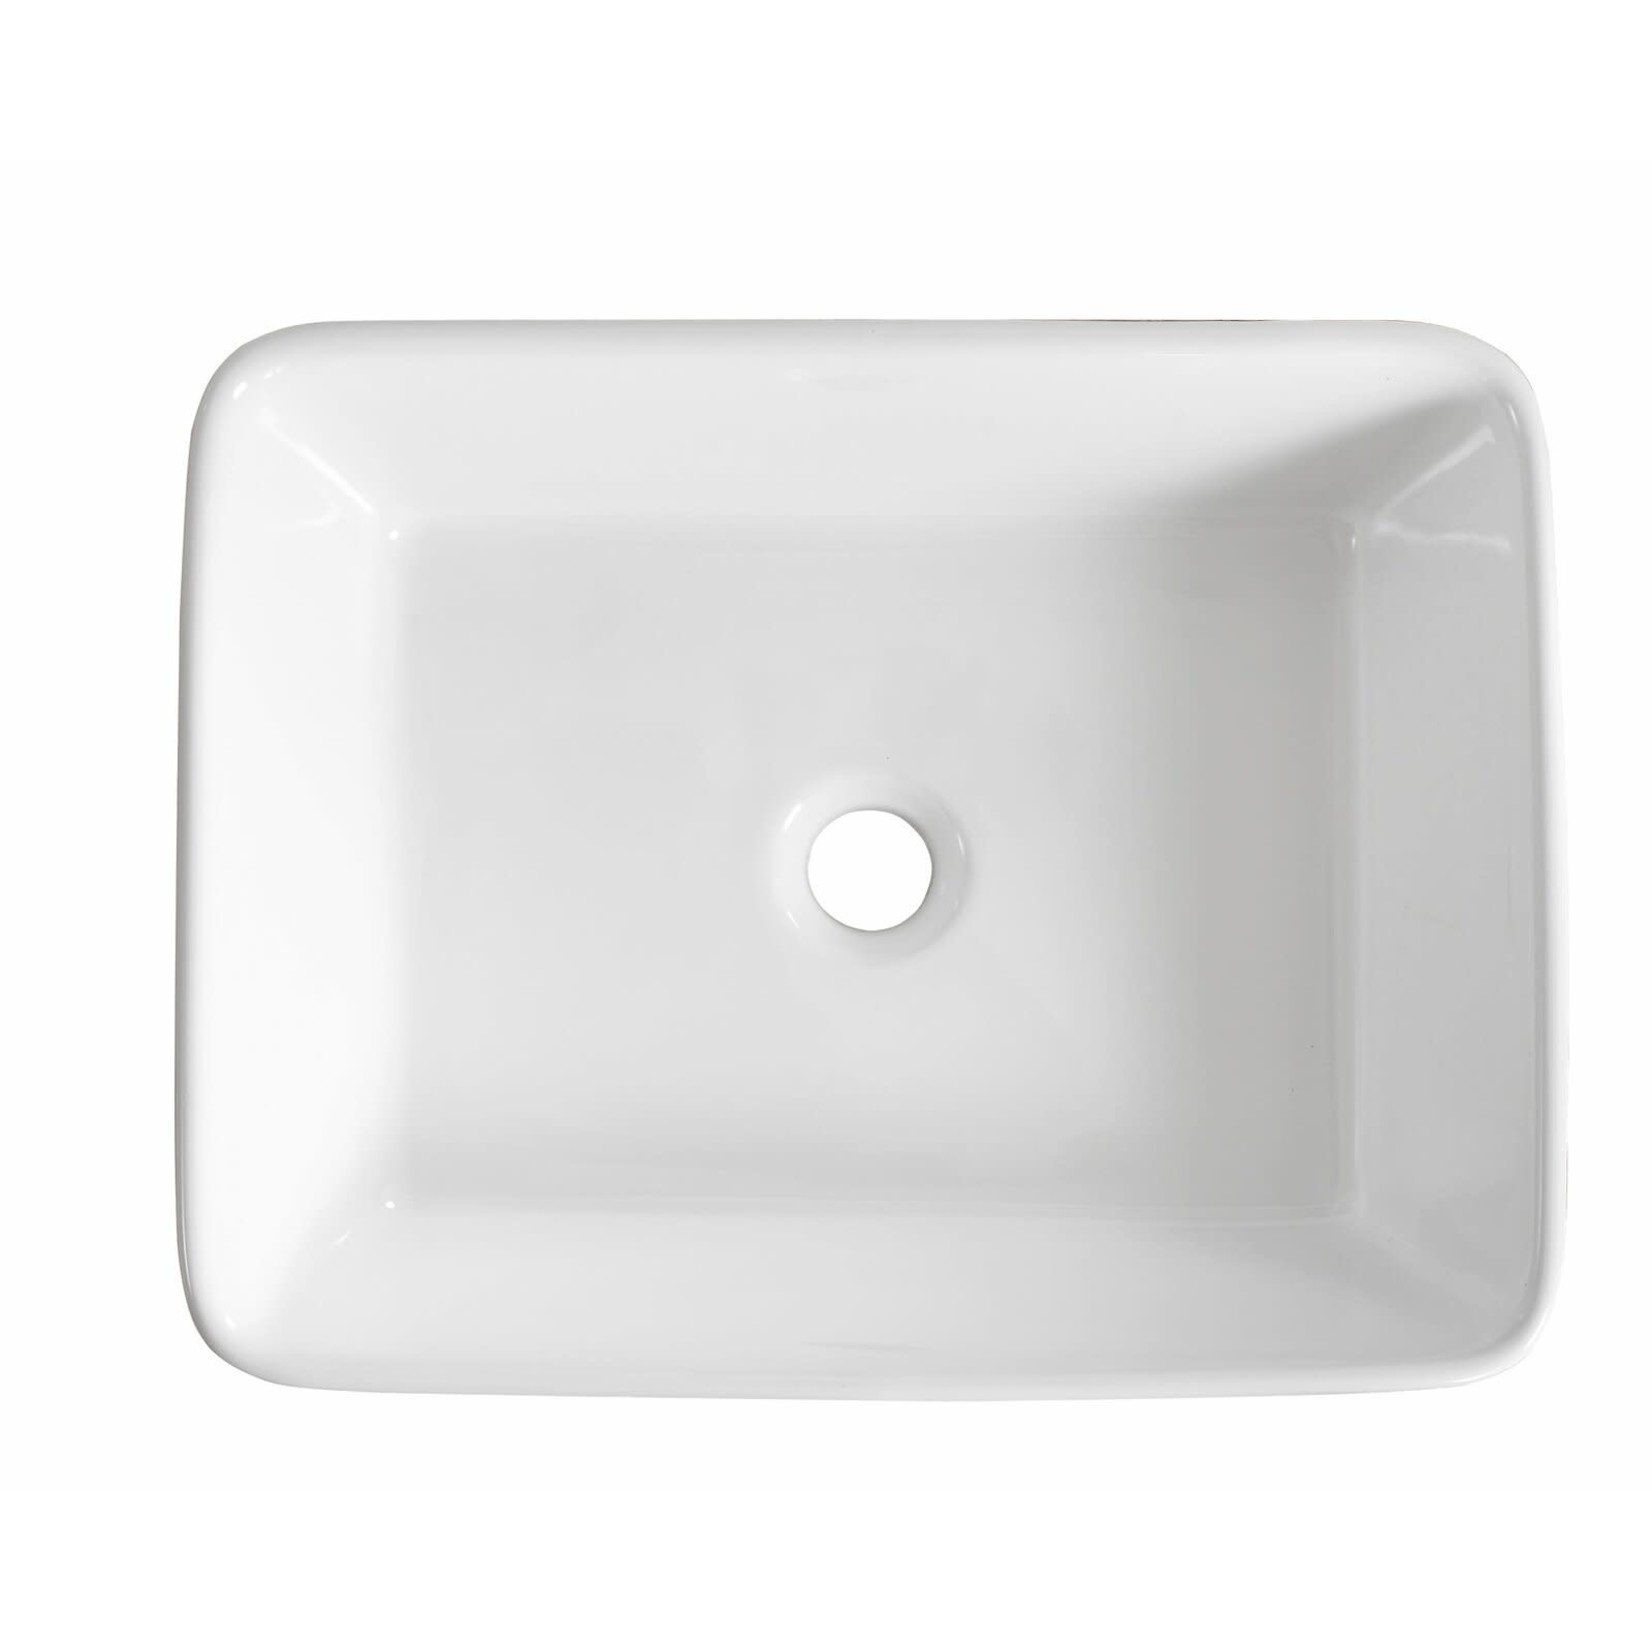 *Deer Valley White Ceramic Rectangular Vessel Bathroom Sink